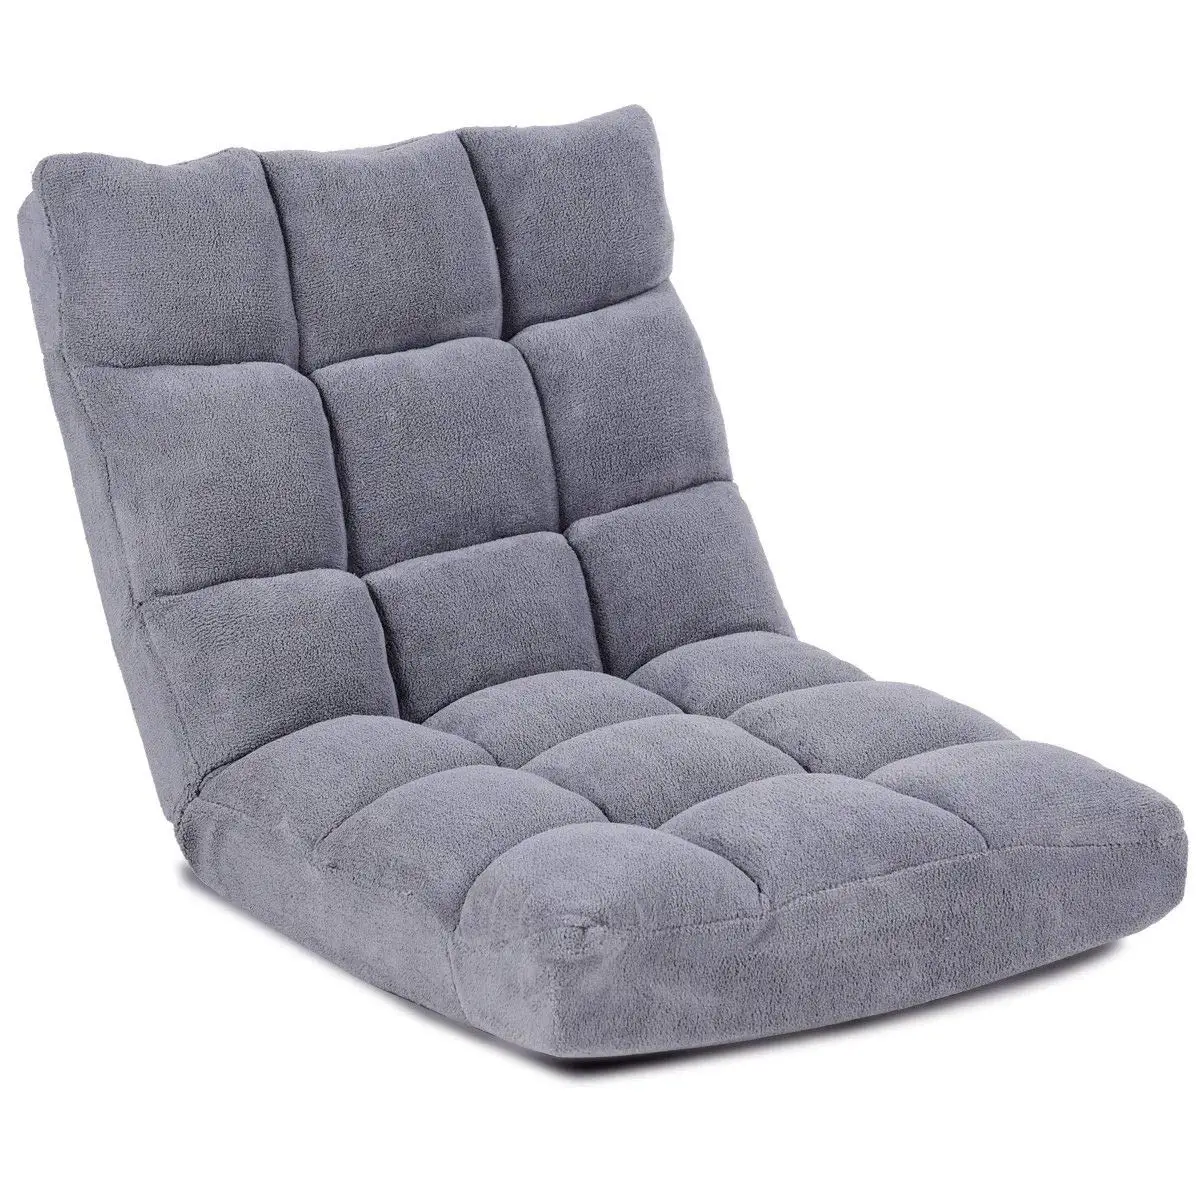 Indoor Floor Folding Adjustable Gaming Sofa Couch Recliner Lounge Chair Buy Japanese Floor Chair